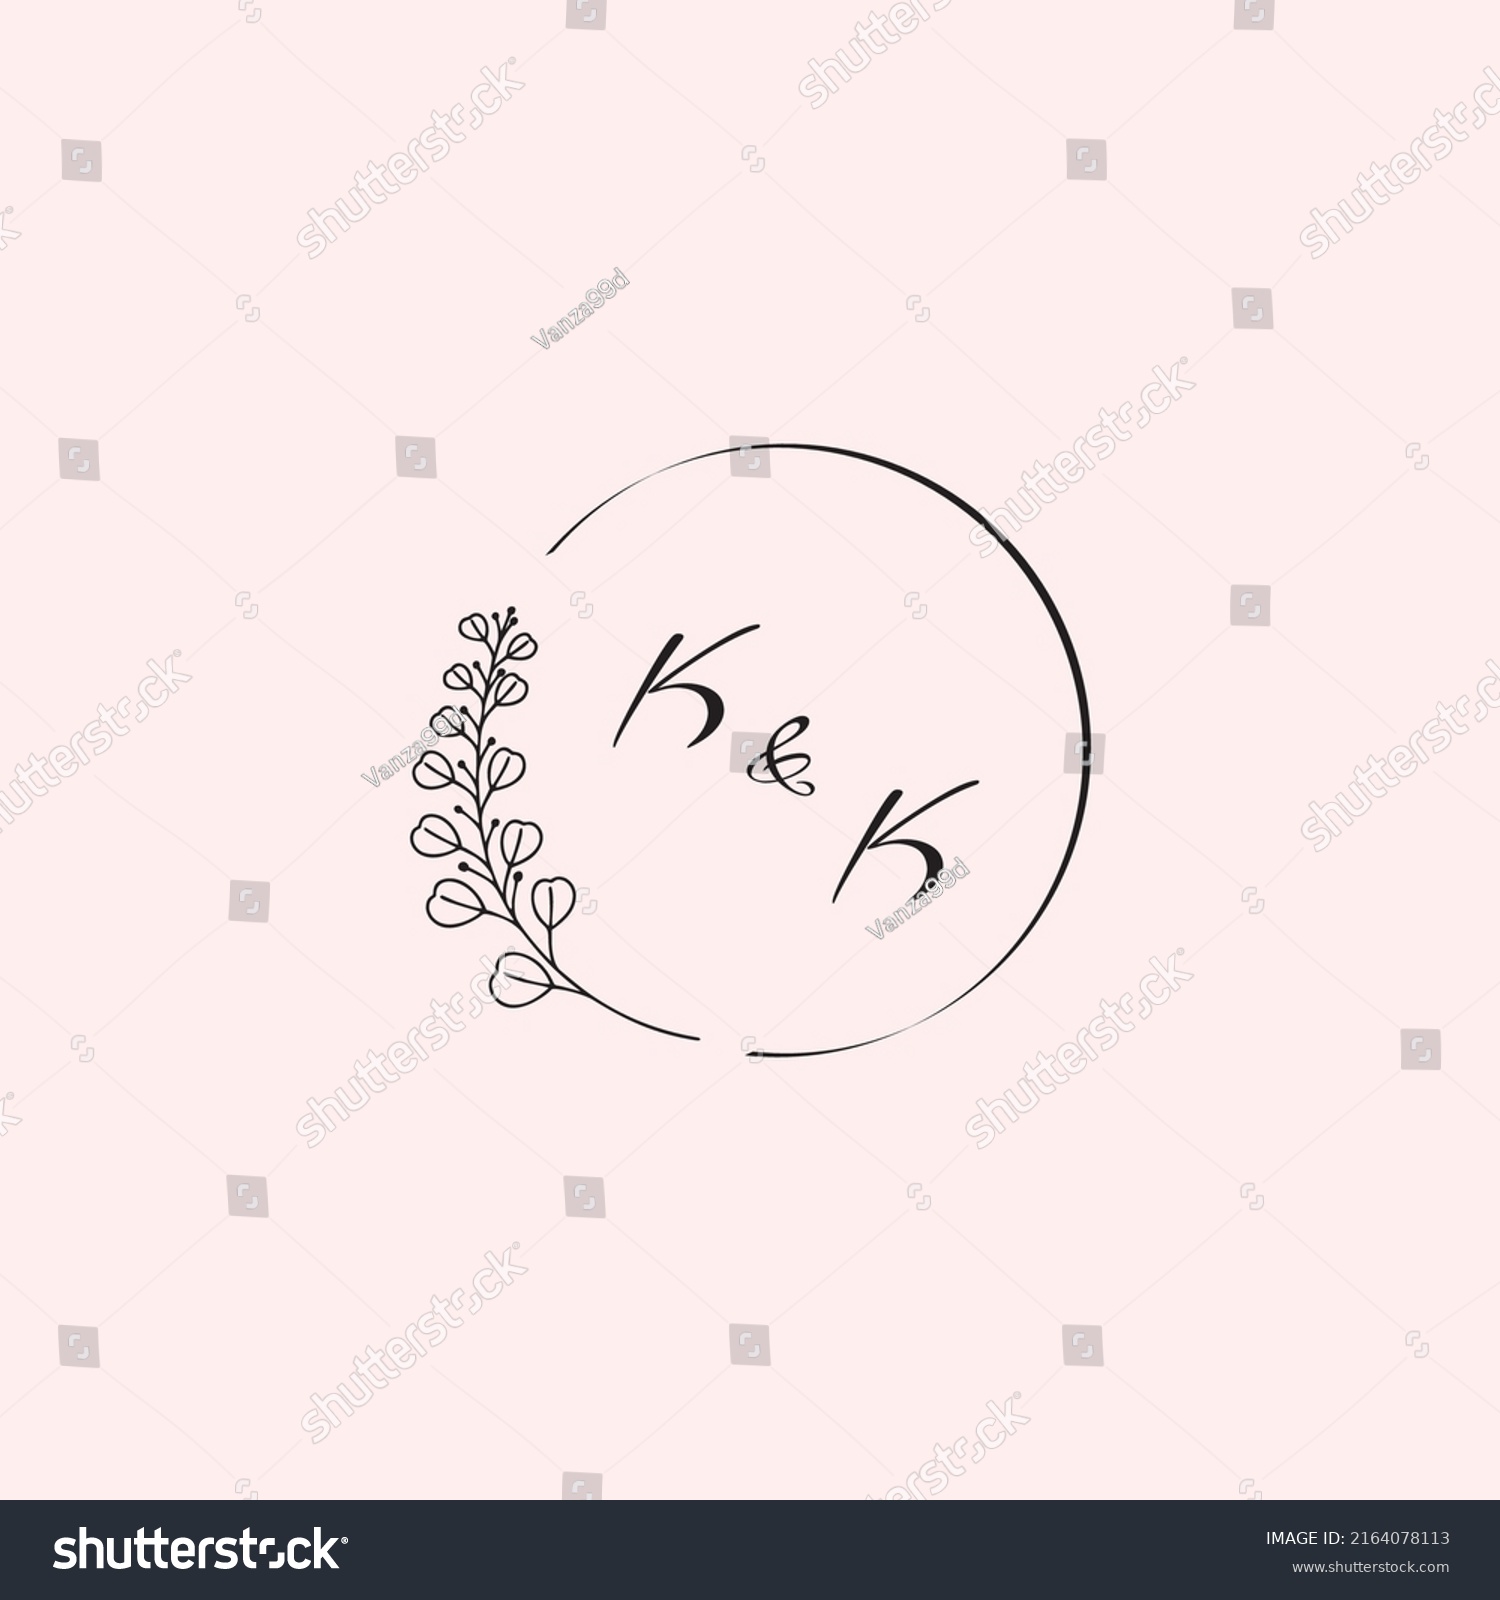 Kk Wedding Logo Letters High Quality Stock Vector (Royalty Free ...